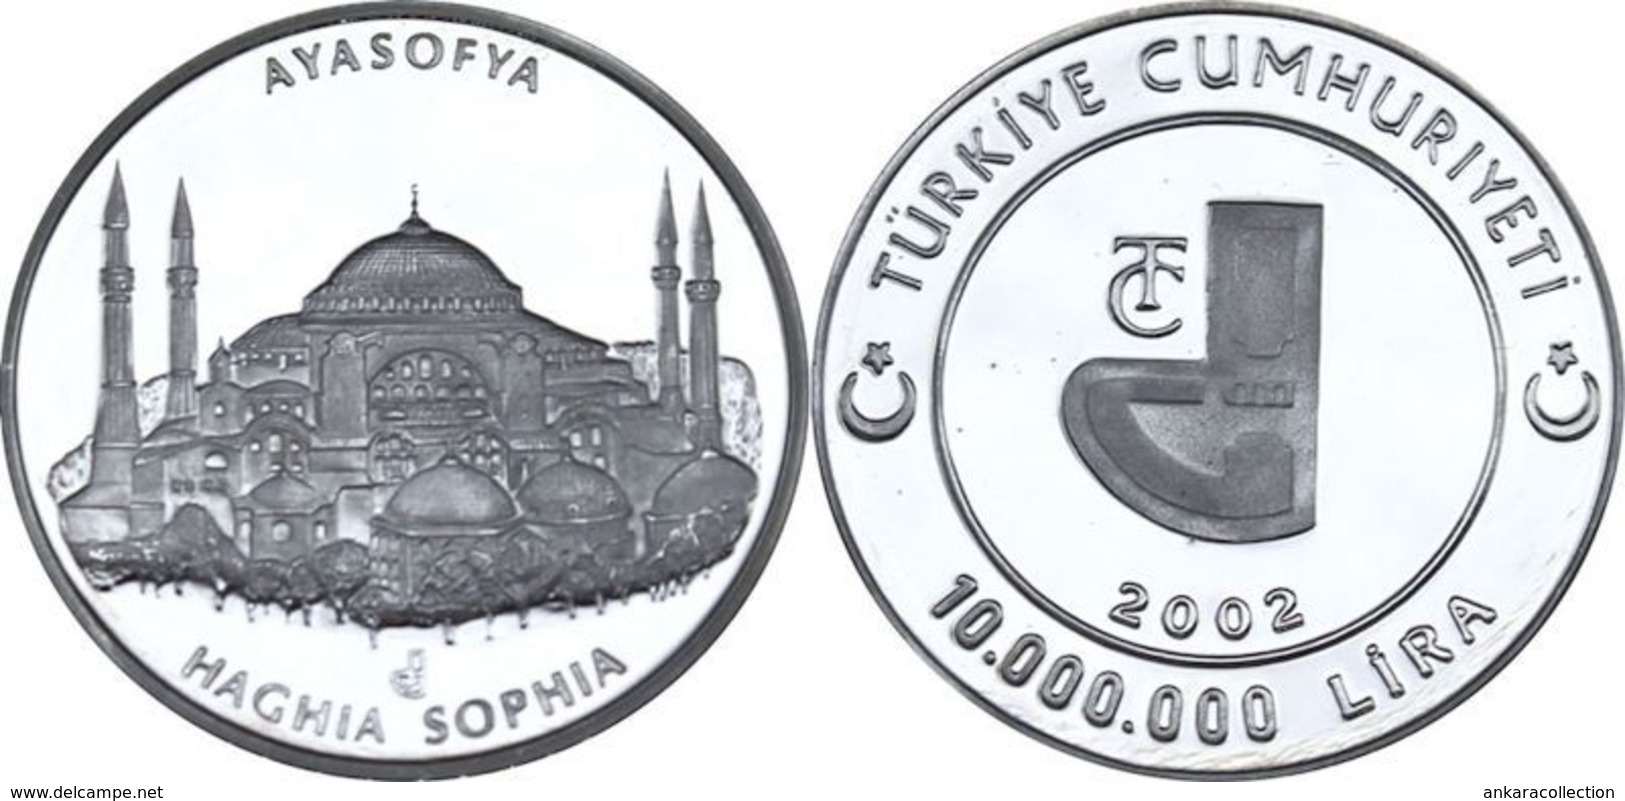 AC - HAGIA SOPHIA - AYA SOFYA MOSQUE COMMEMORATIVE SILVER COIN TURKEY 2002 PROOF UNCIRCULATED - Turkey